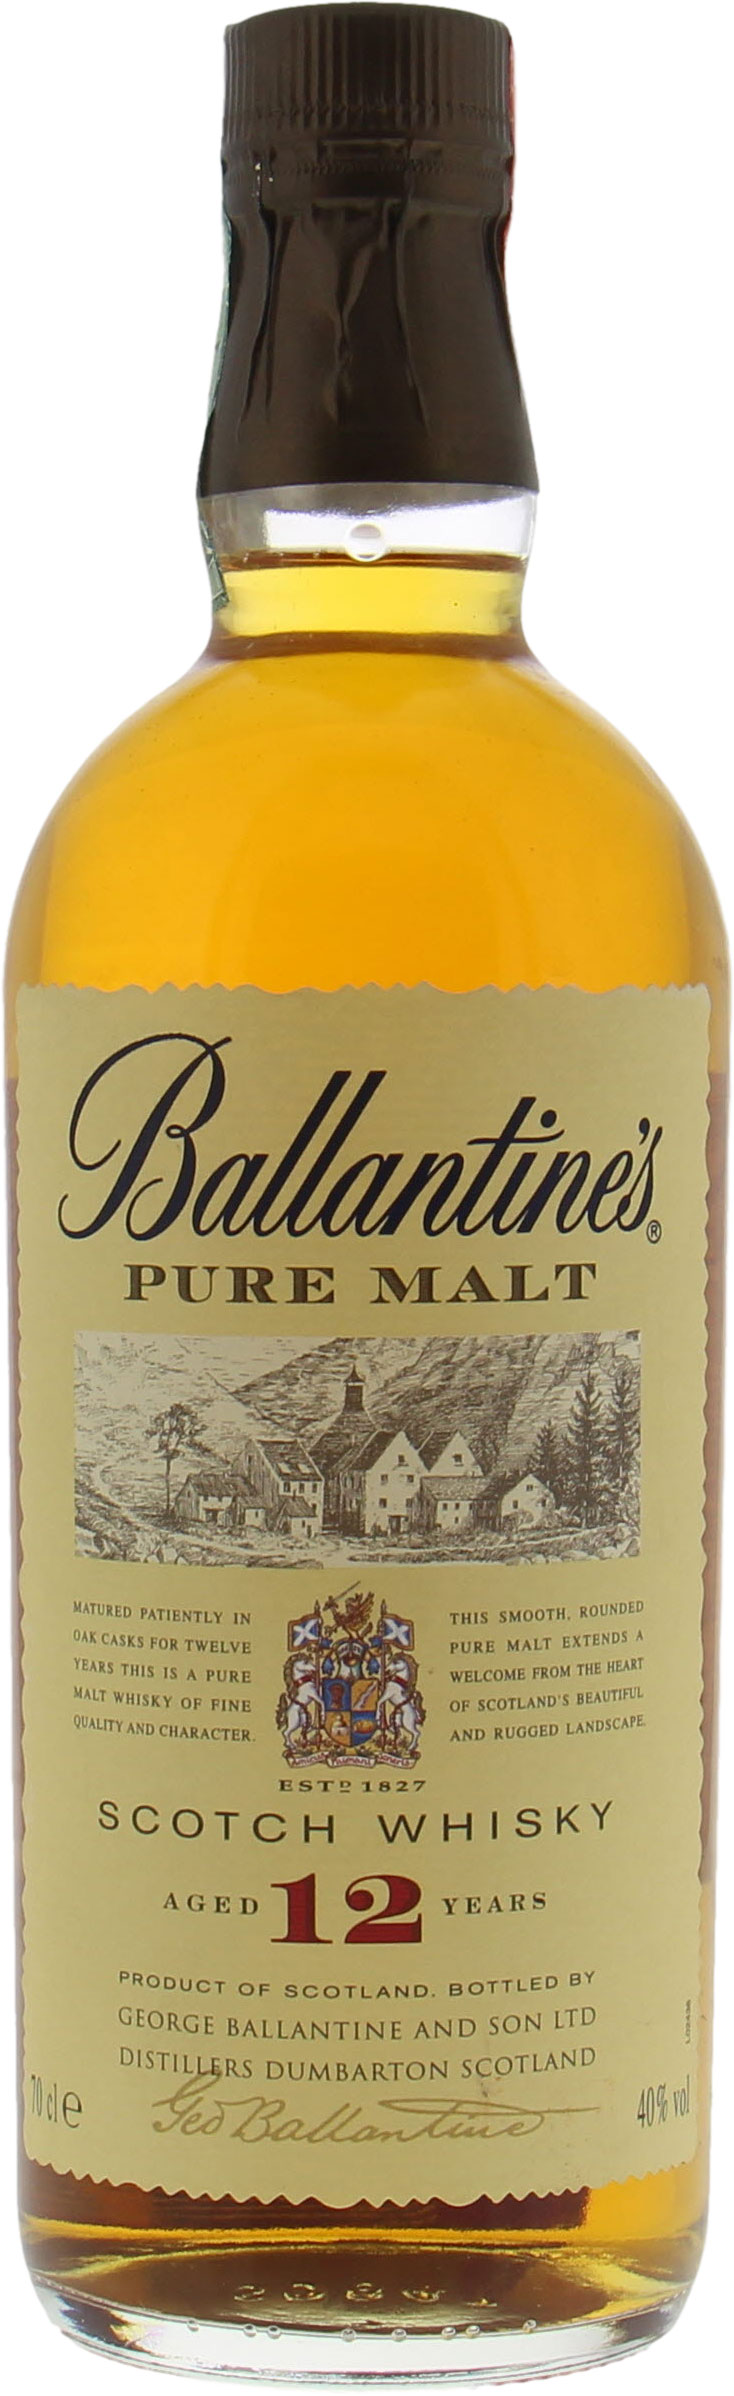 Ballantines - 12 Years Old Pure Malt 40% NV No Original Box Included